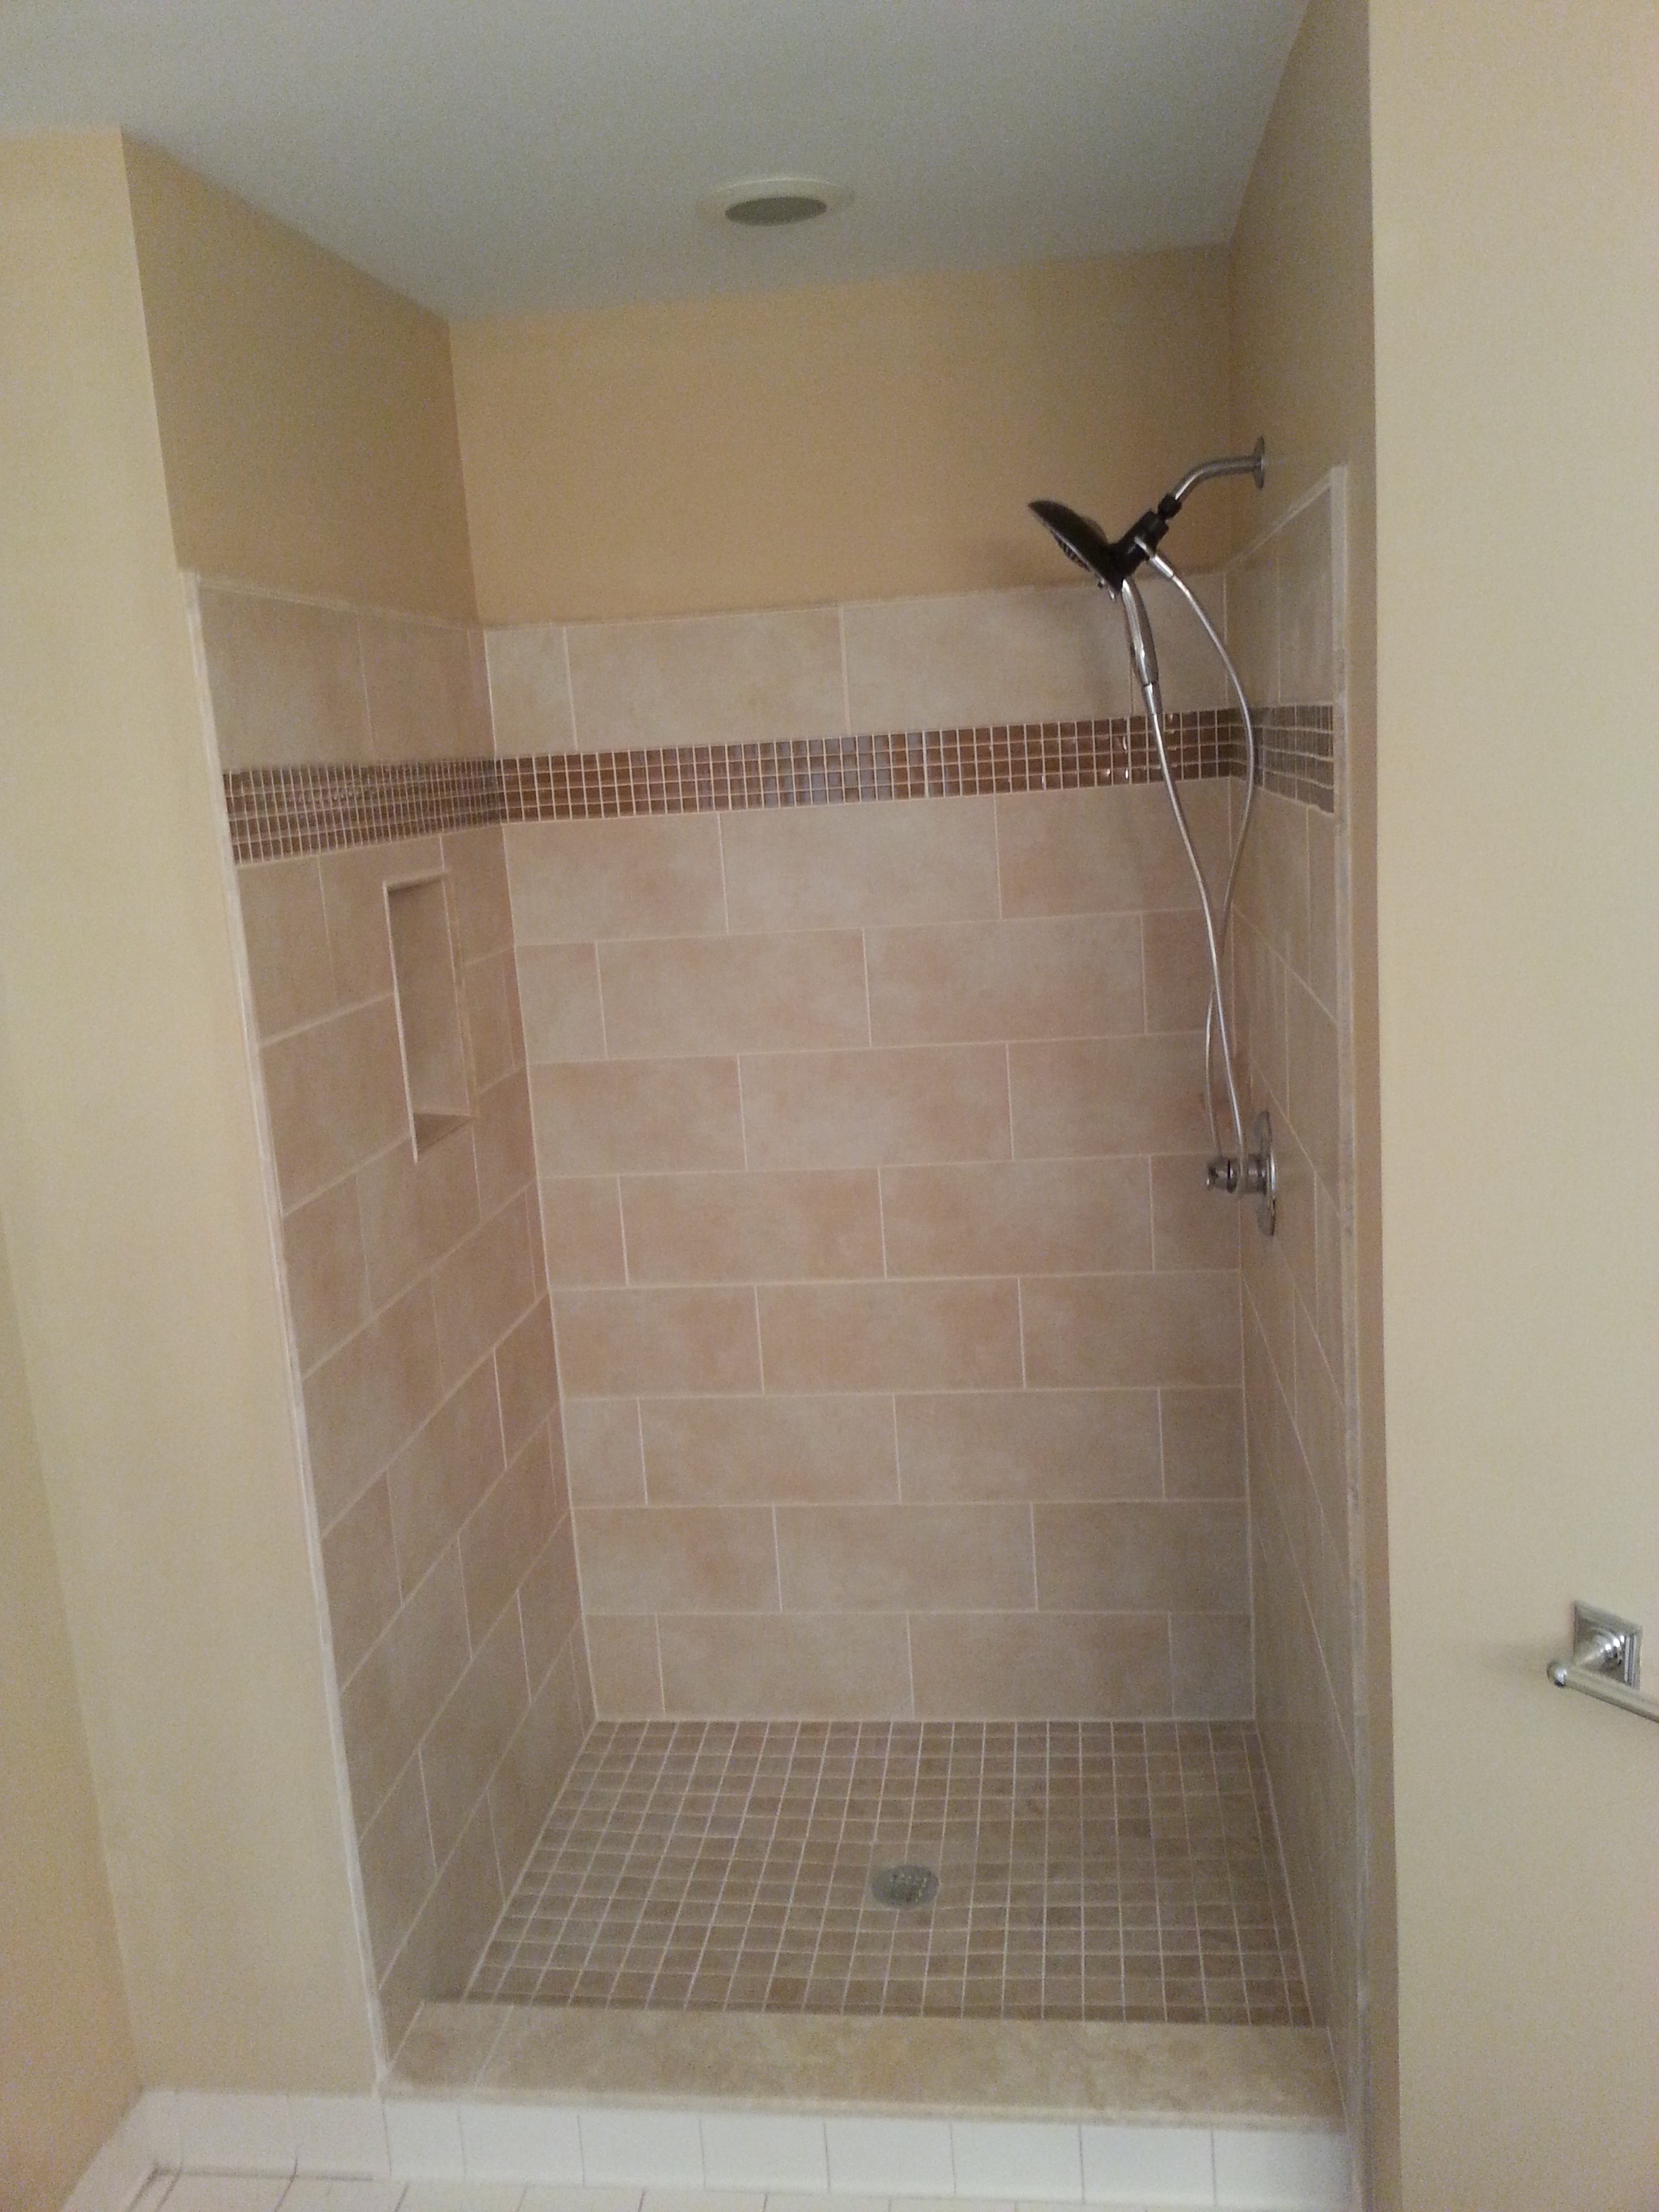 Shower Ceiling Tile Or Drywall Shower Ceiling Tile Or Drywall shower stall tile ideas pleasant home design 2448 X 3264